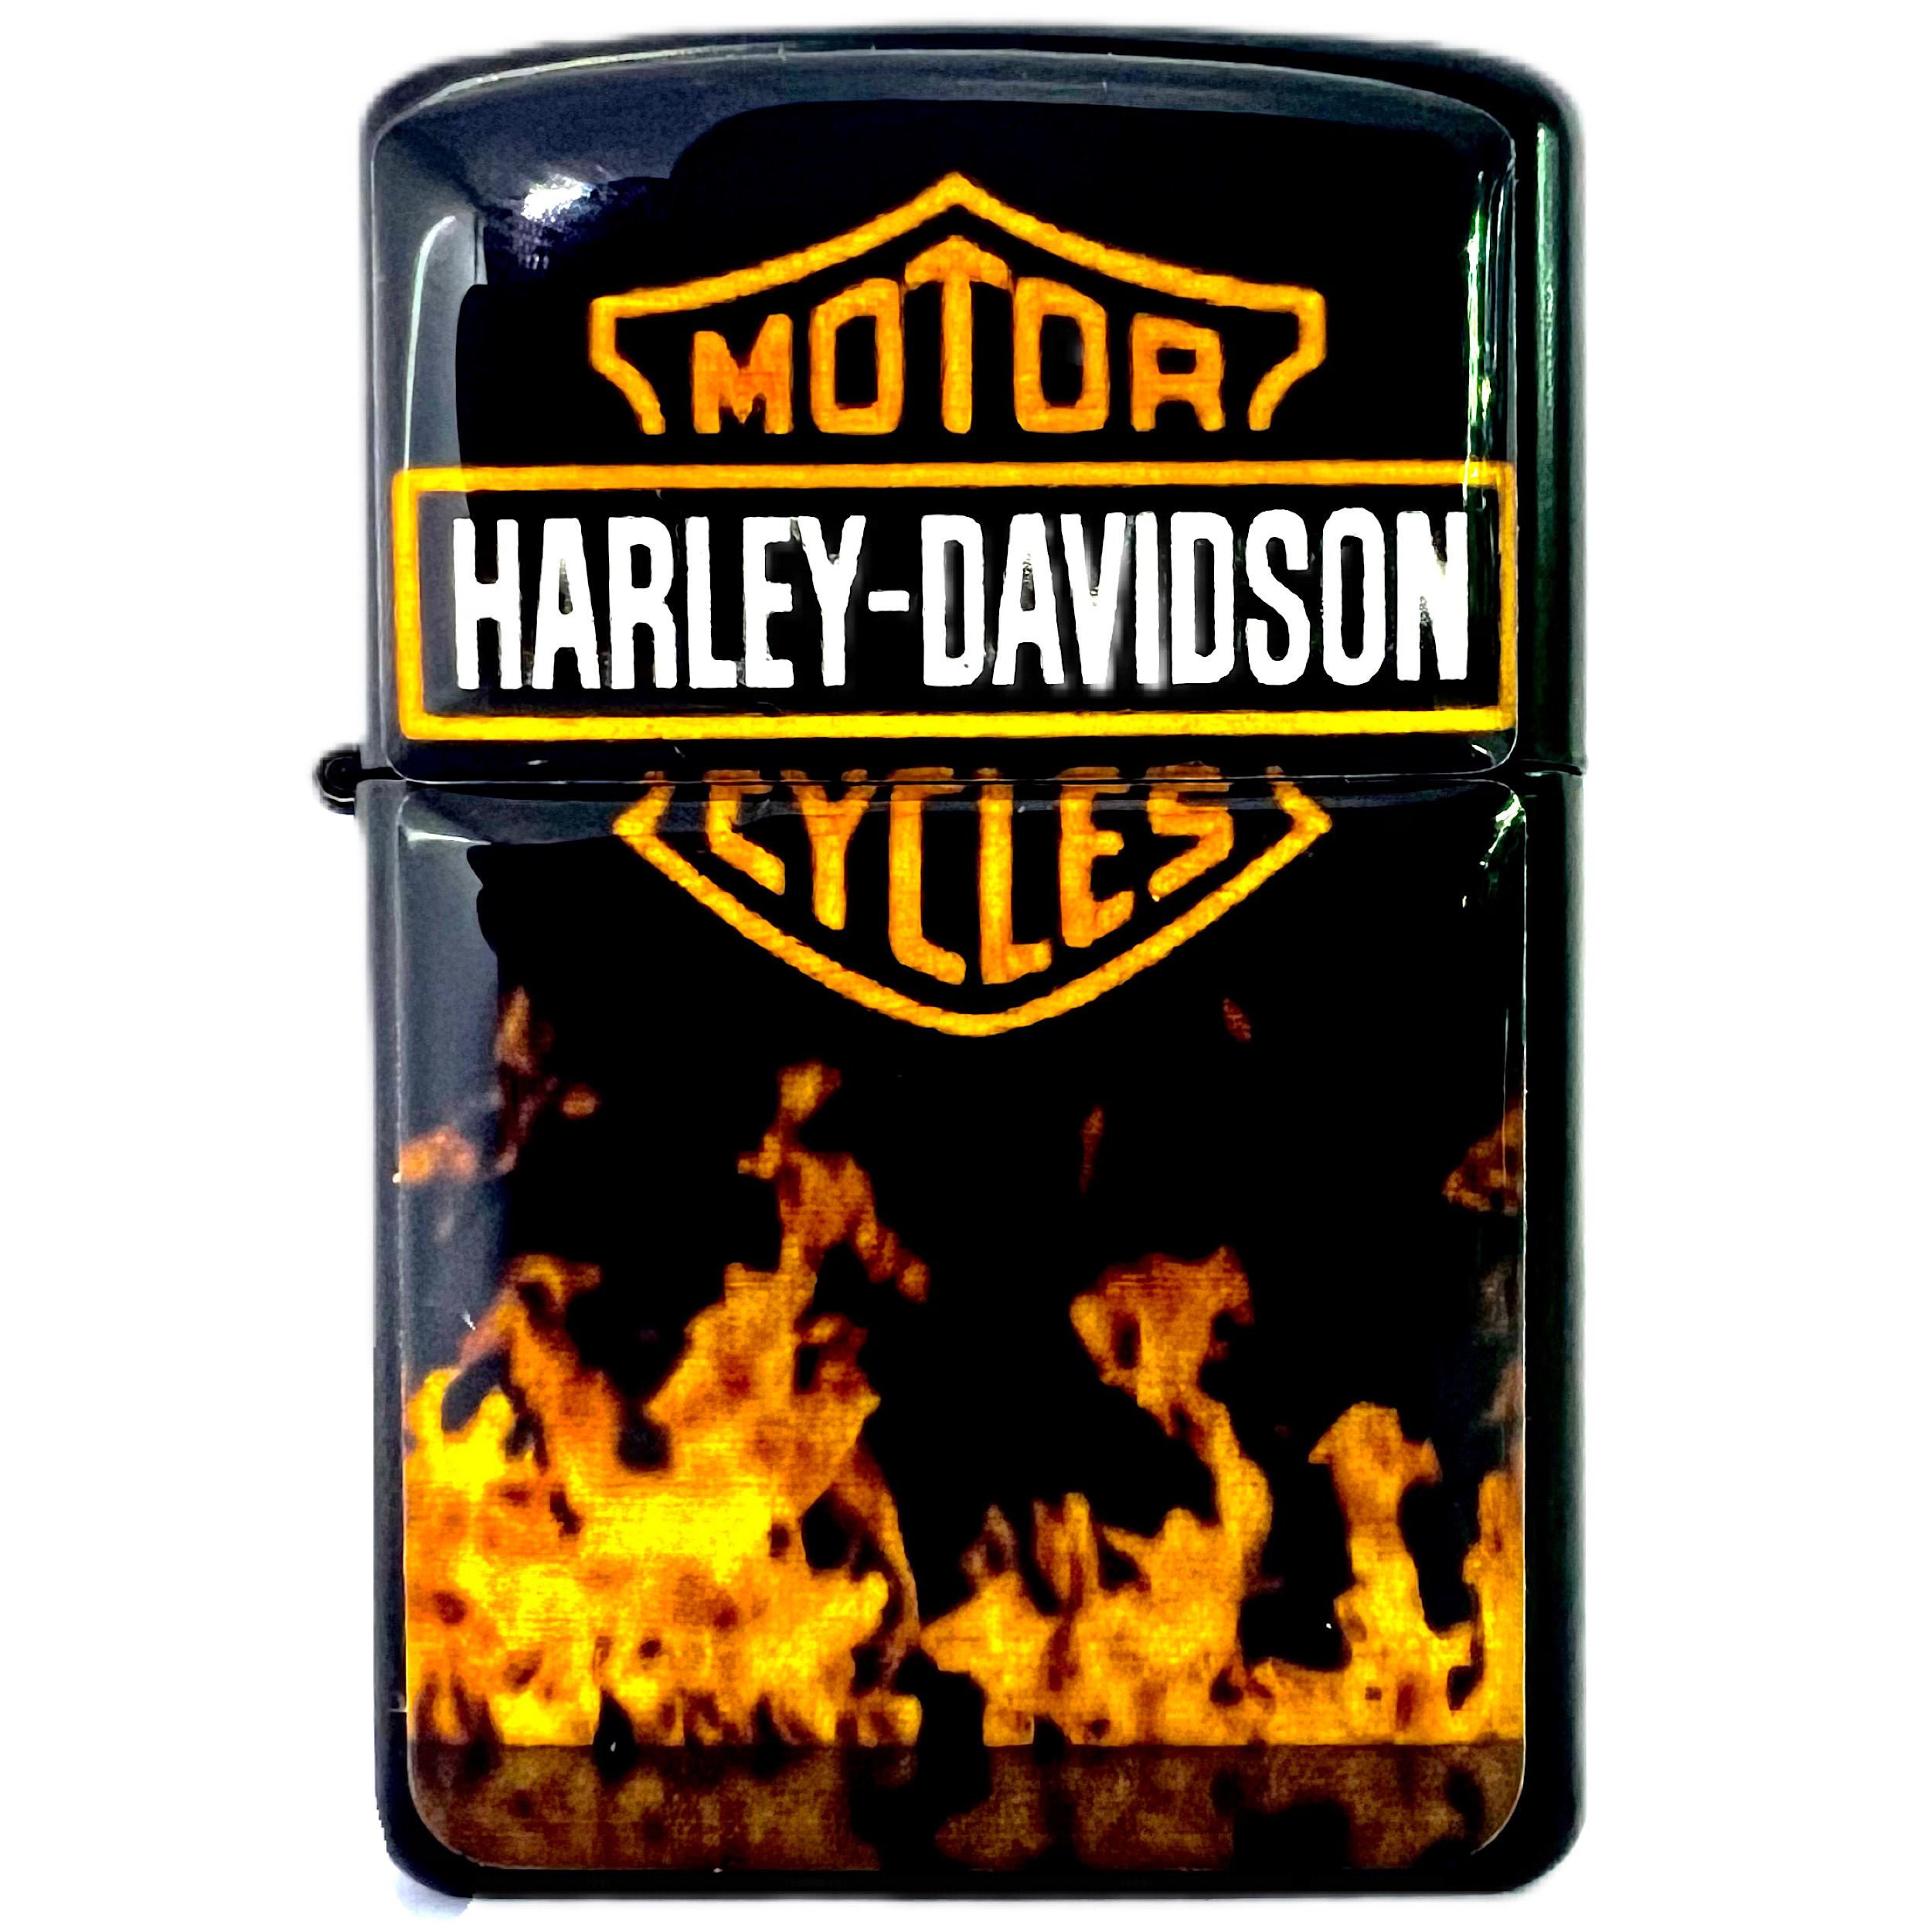 فندک مدل Motor Harley davidson